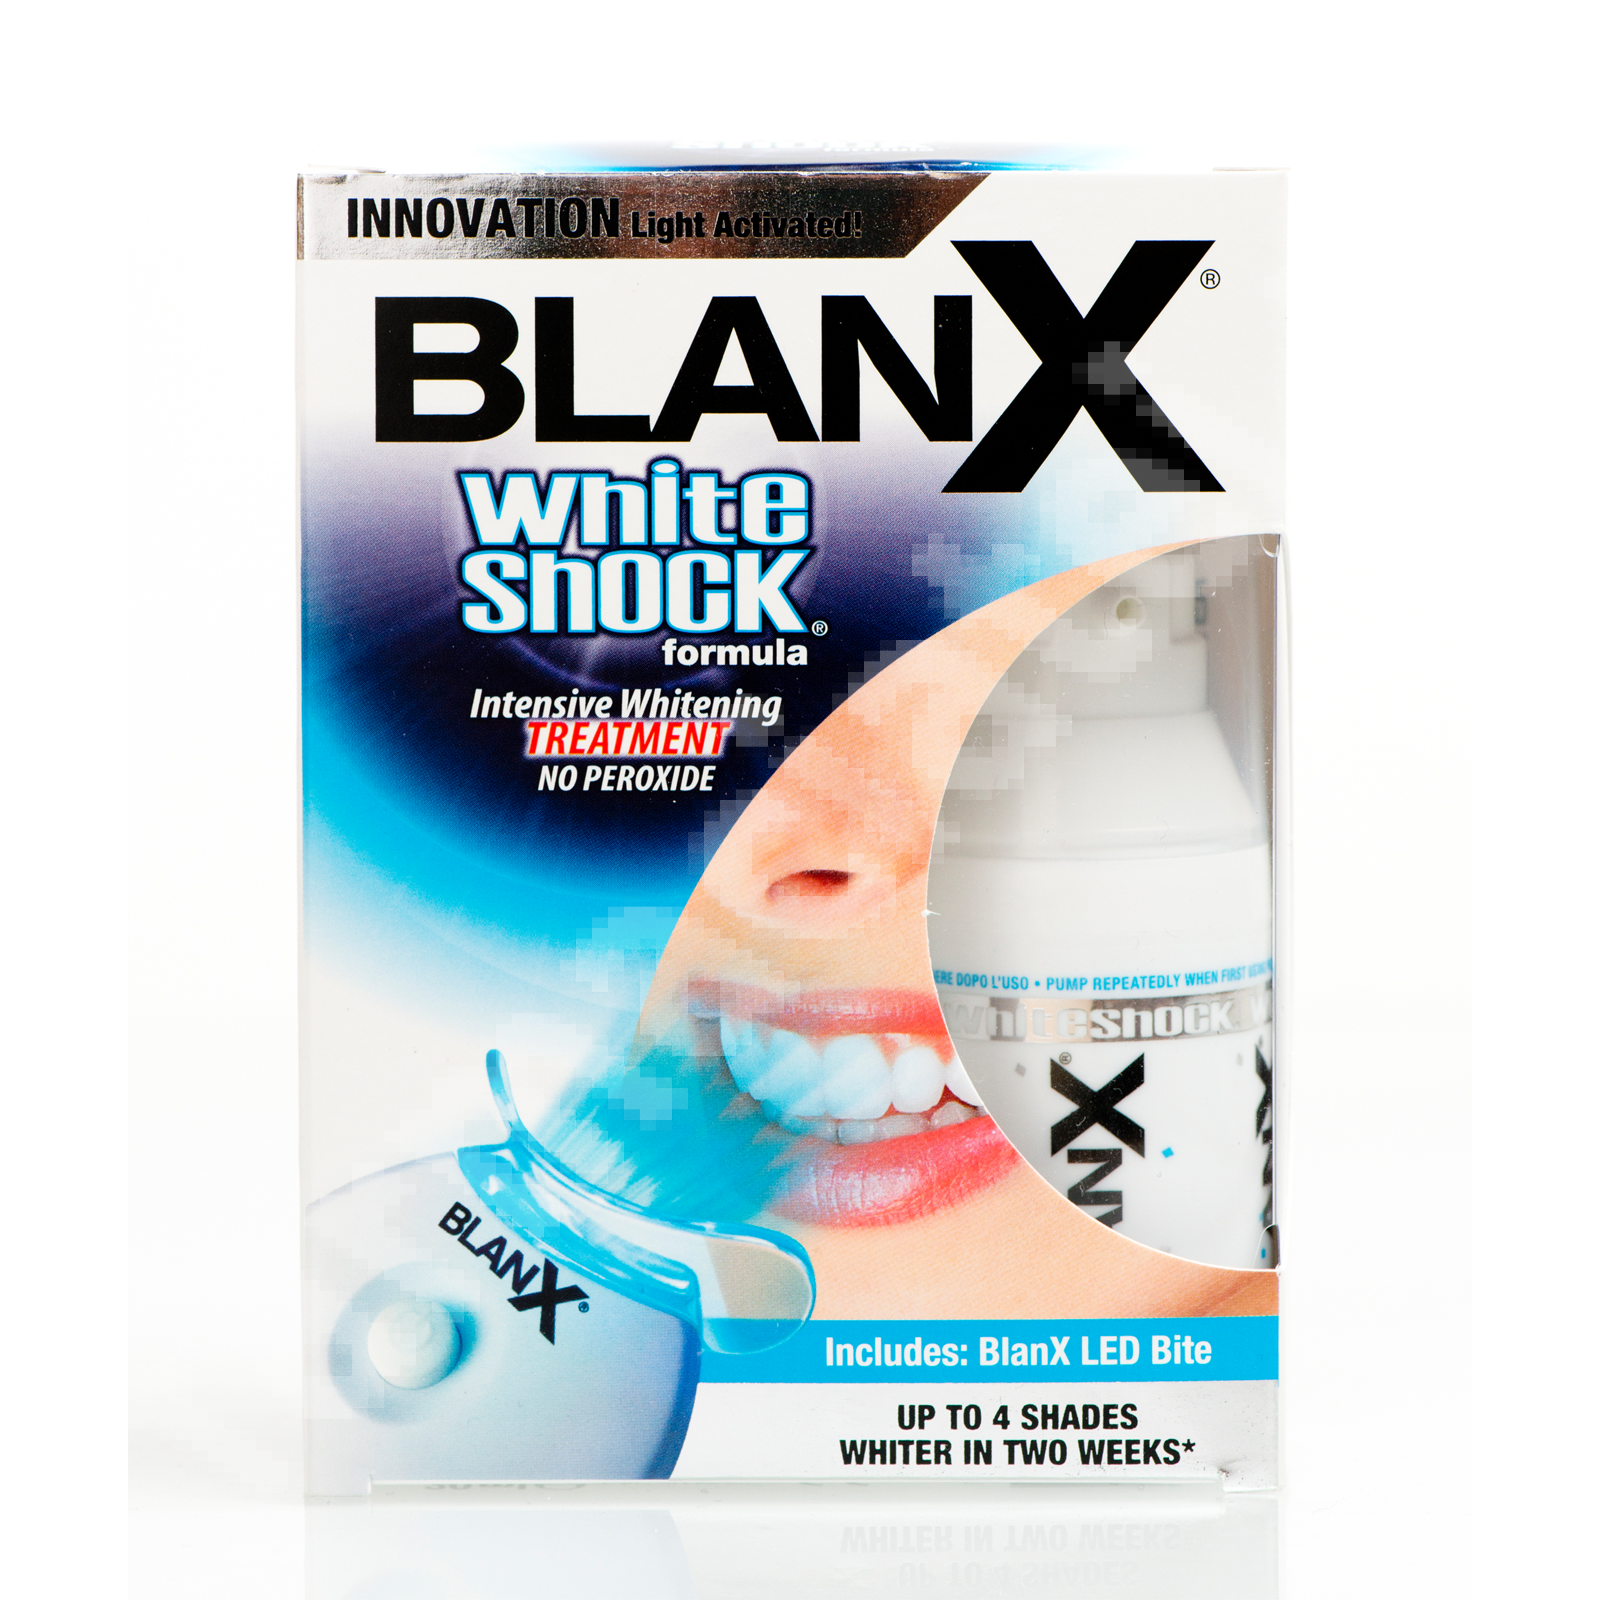 Tratament intensiv pentru albirea dintilor fara Peroxid Blanx White Shock, 30 ml + Blanx Led, Coswell